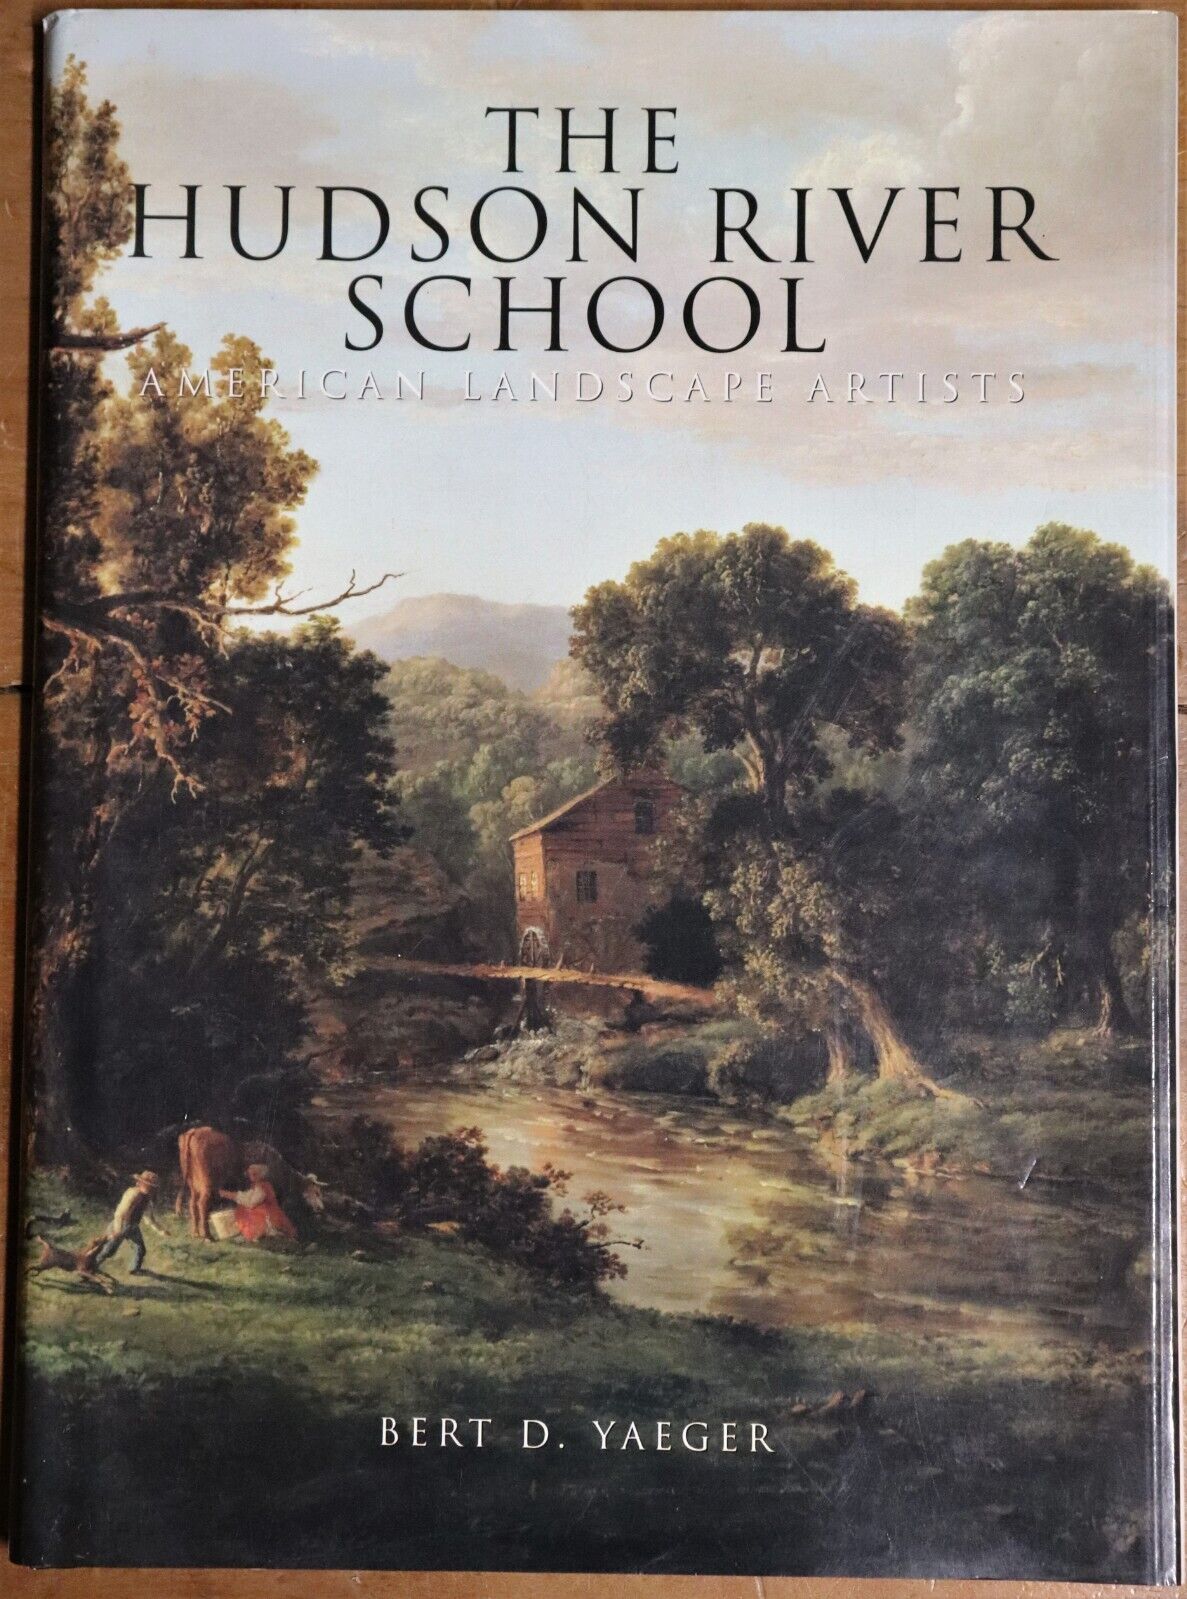 The Hudson River School: American Landscape Artists - 1996 - Art Book